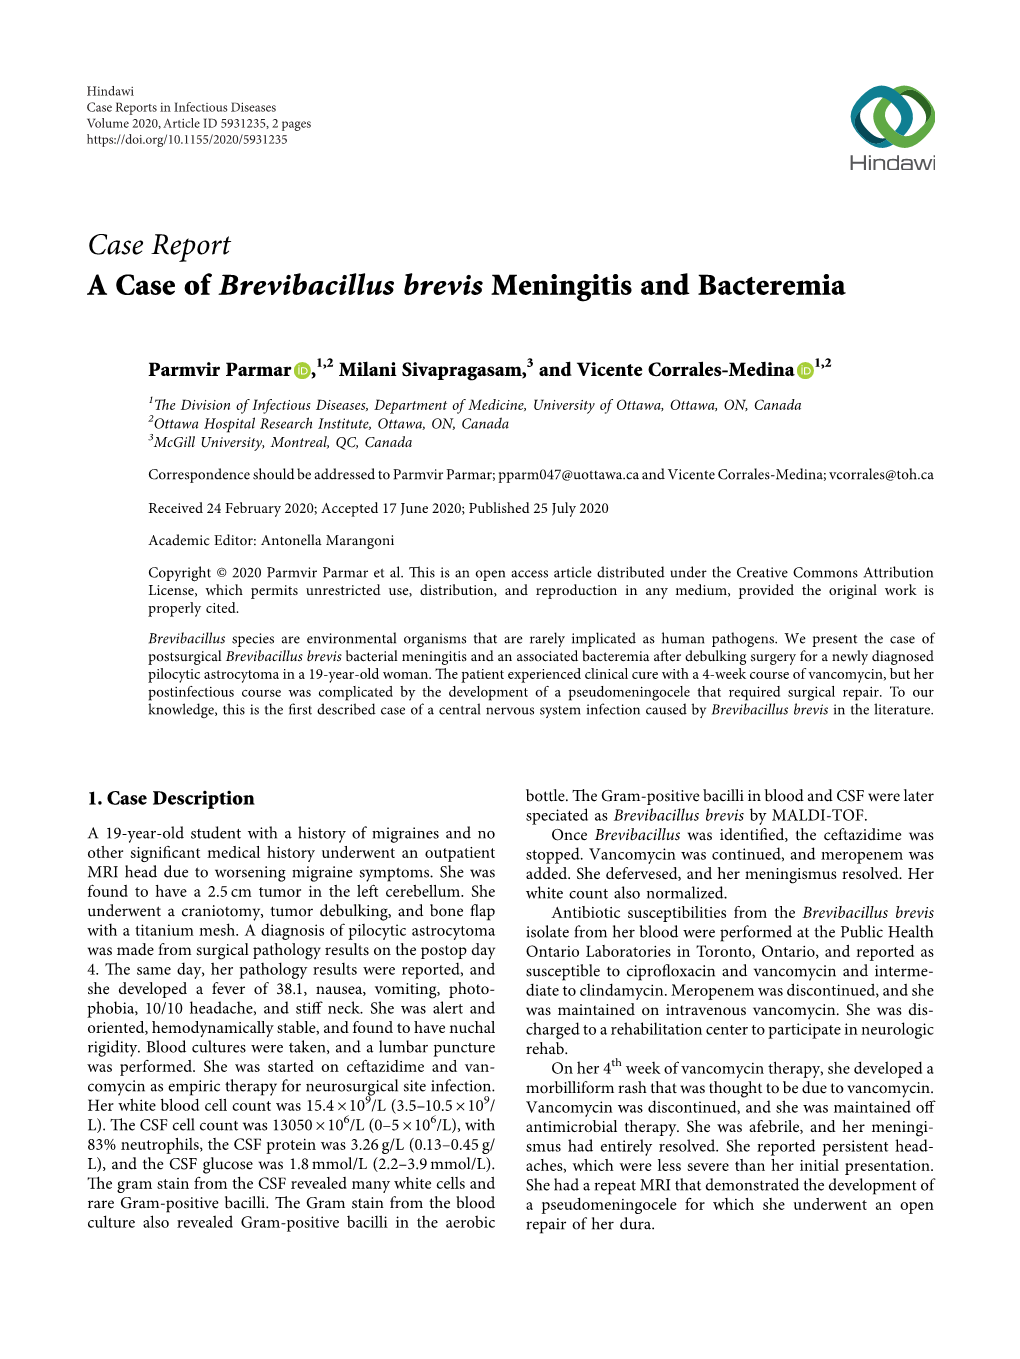 A Case of Brevibacillus Brevis Meningitis and Bacteremia